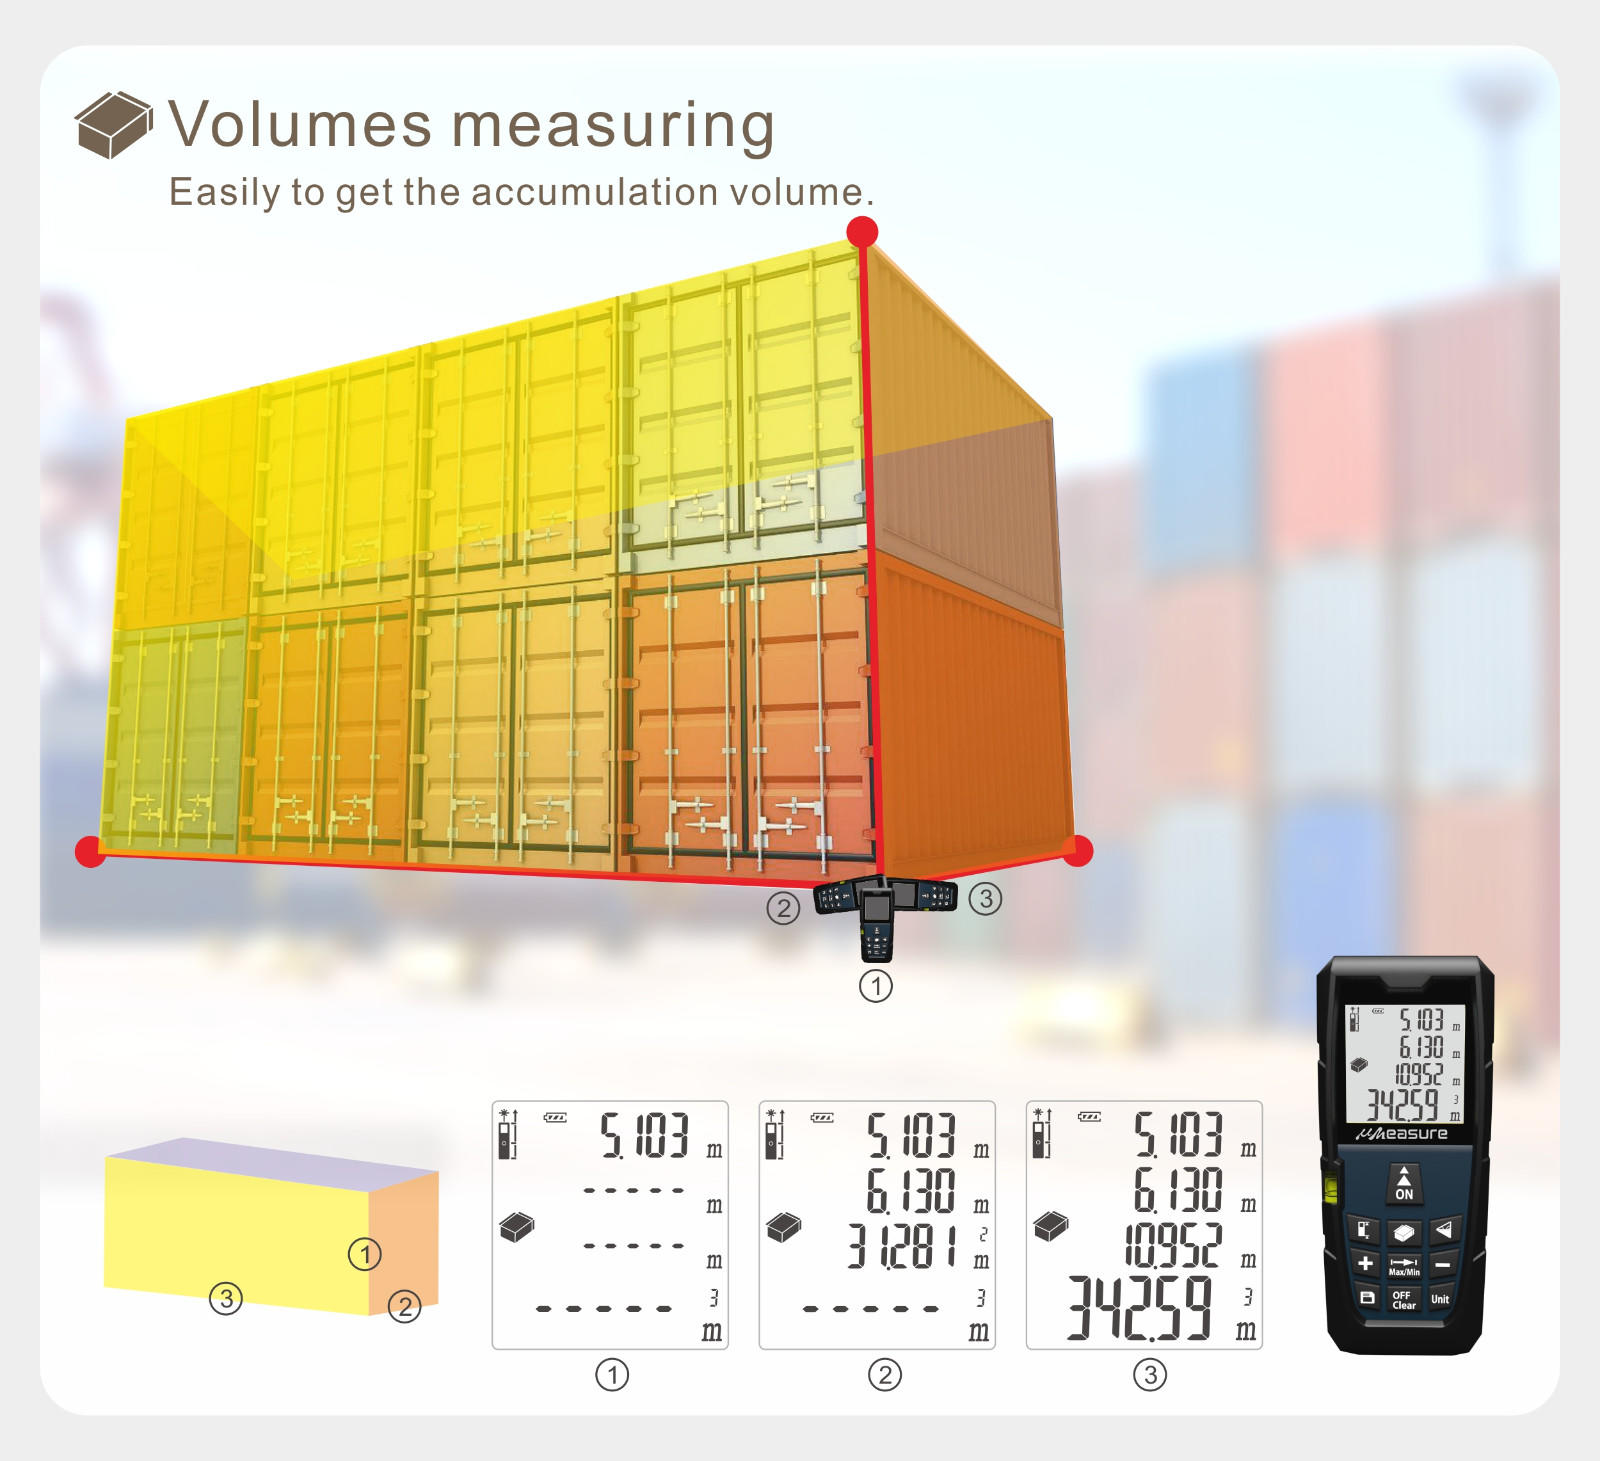 UMeasure multimode laser distance meter price display for measuring